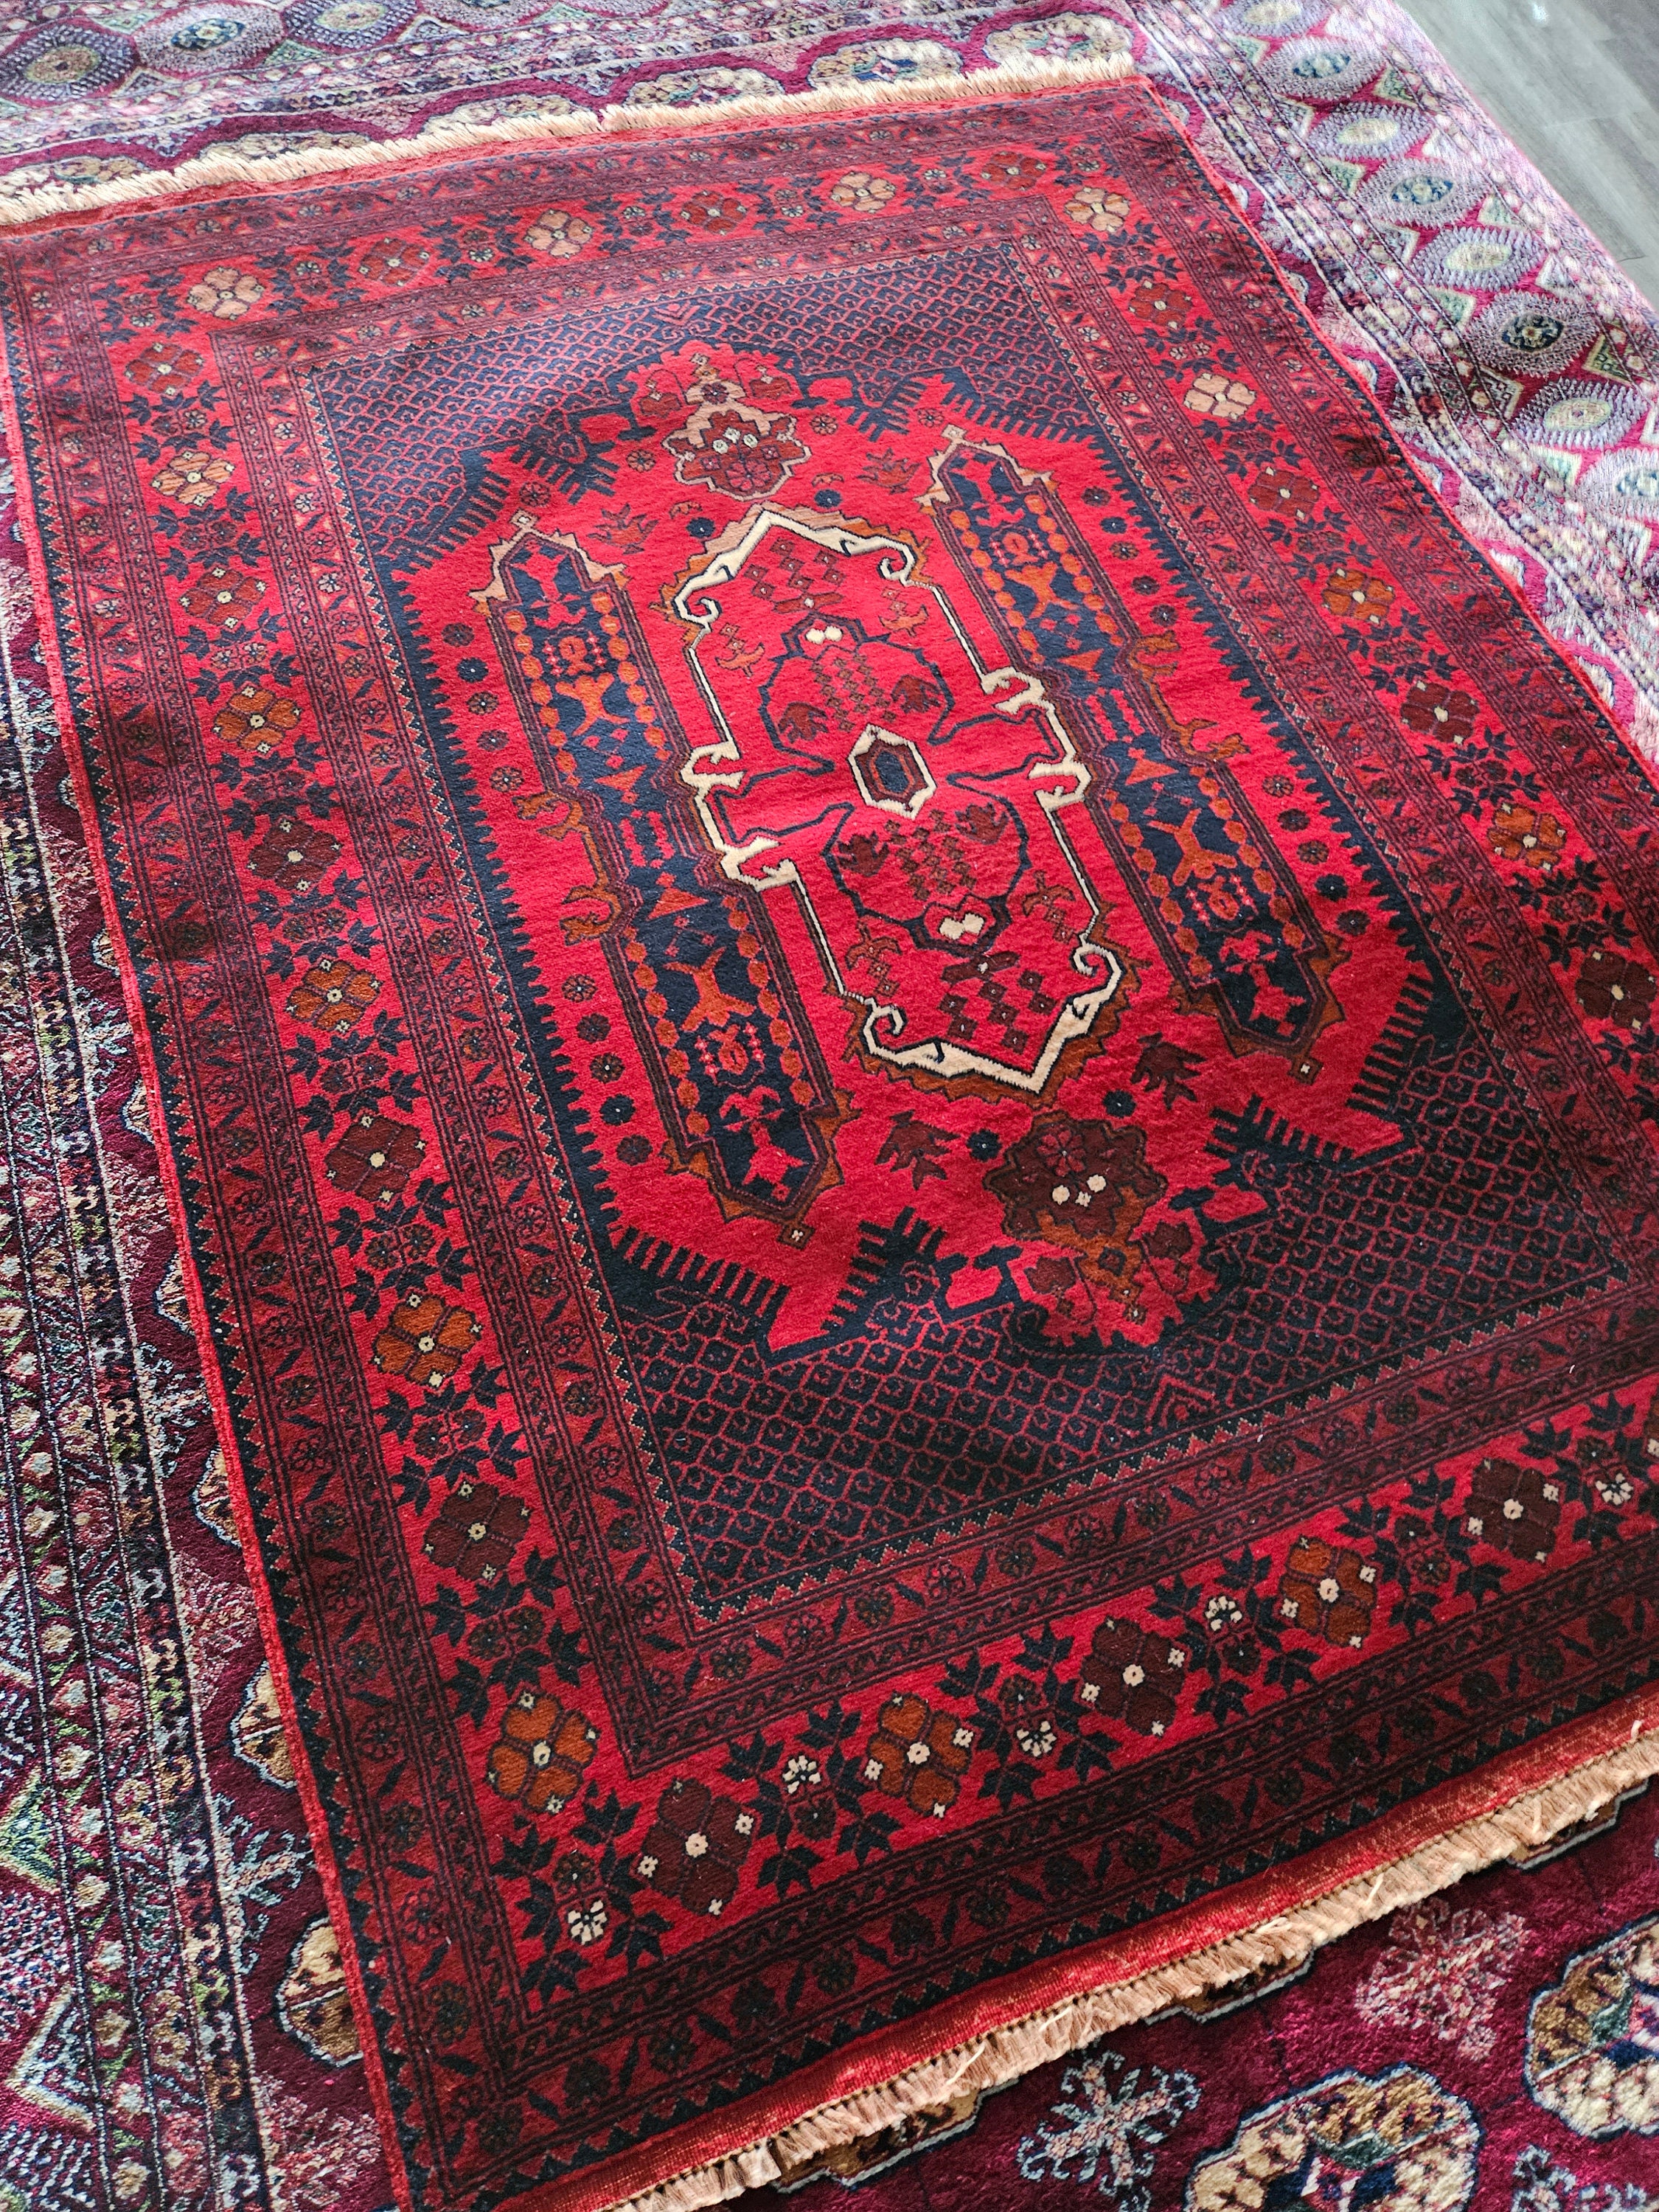 Small Afghan Rug, 3x5 Feet Red Carpet